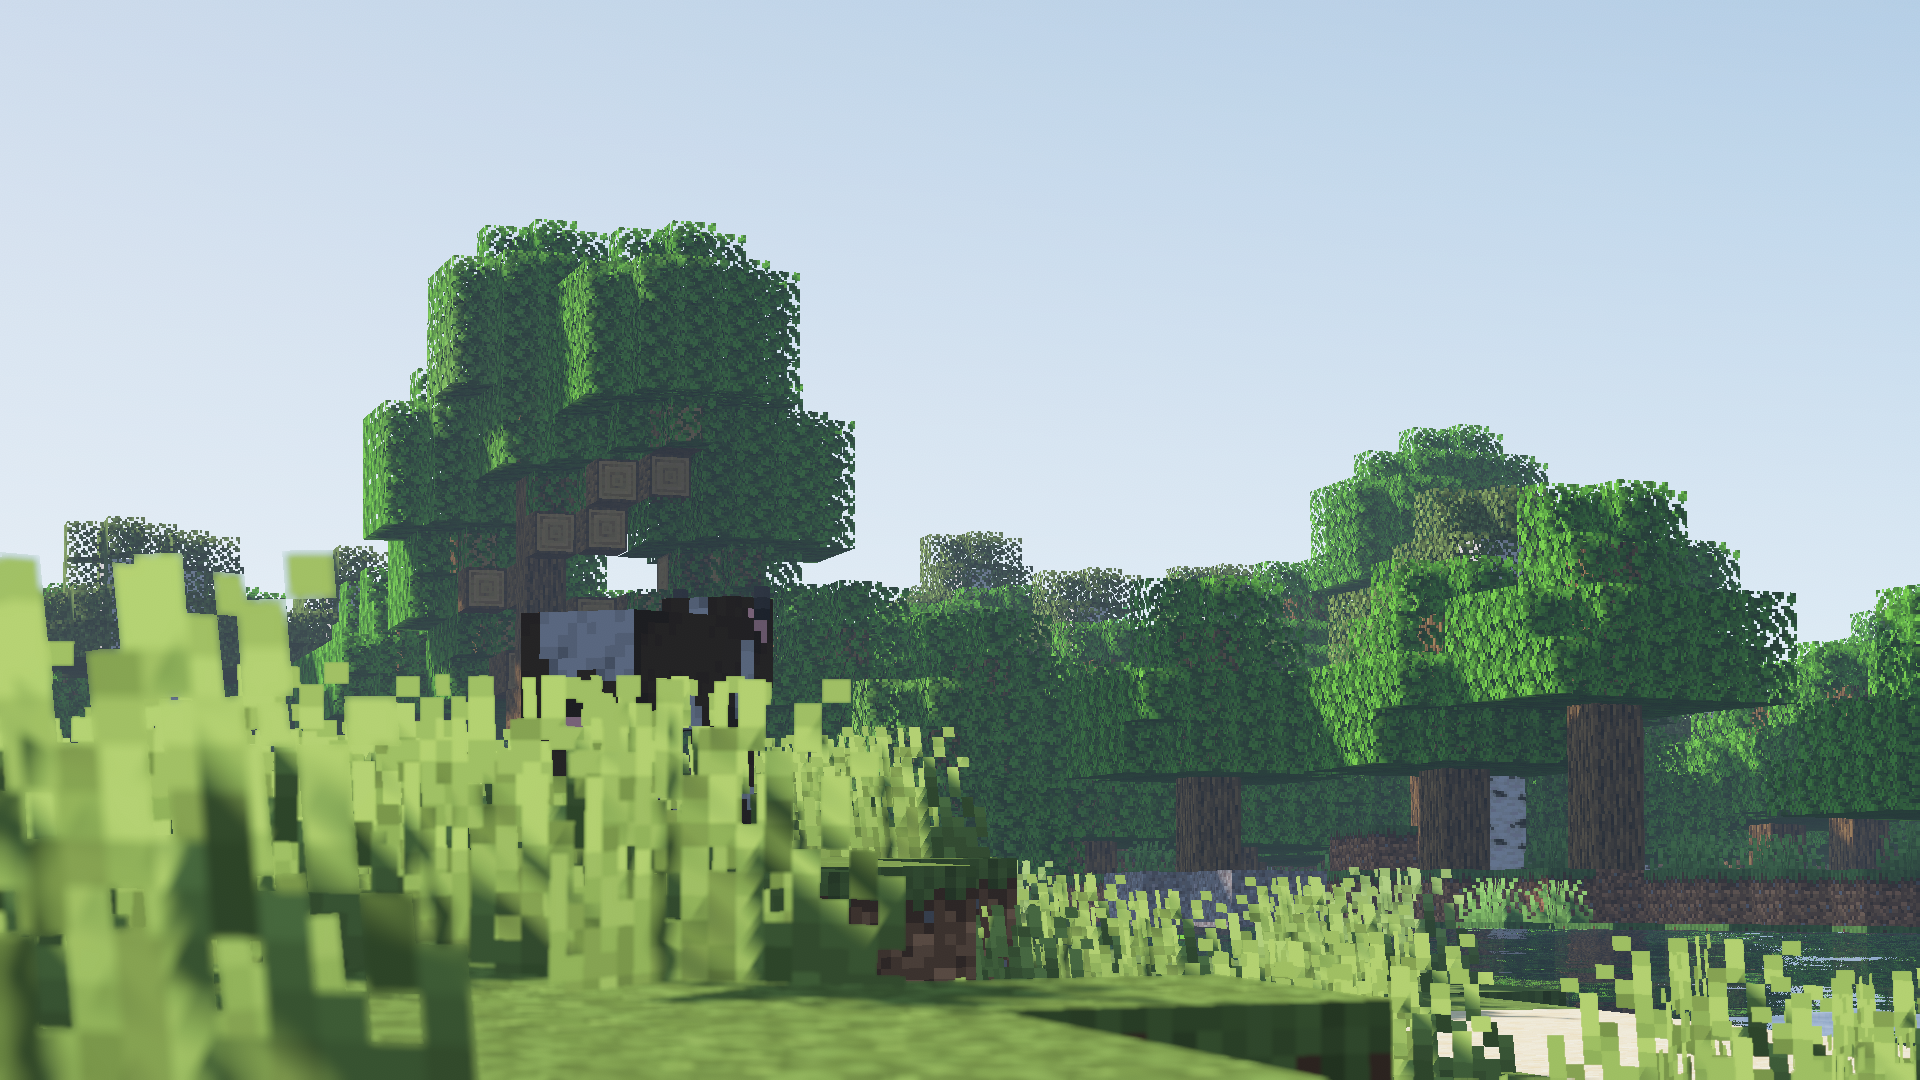 General 1920x1080 Minecraft trees shaders plants cow sheep forest sky oak birch 3D Blocks